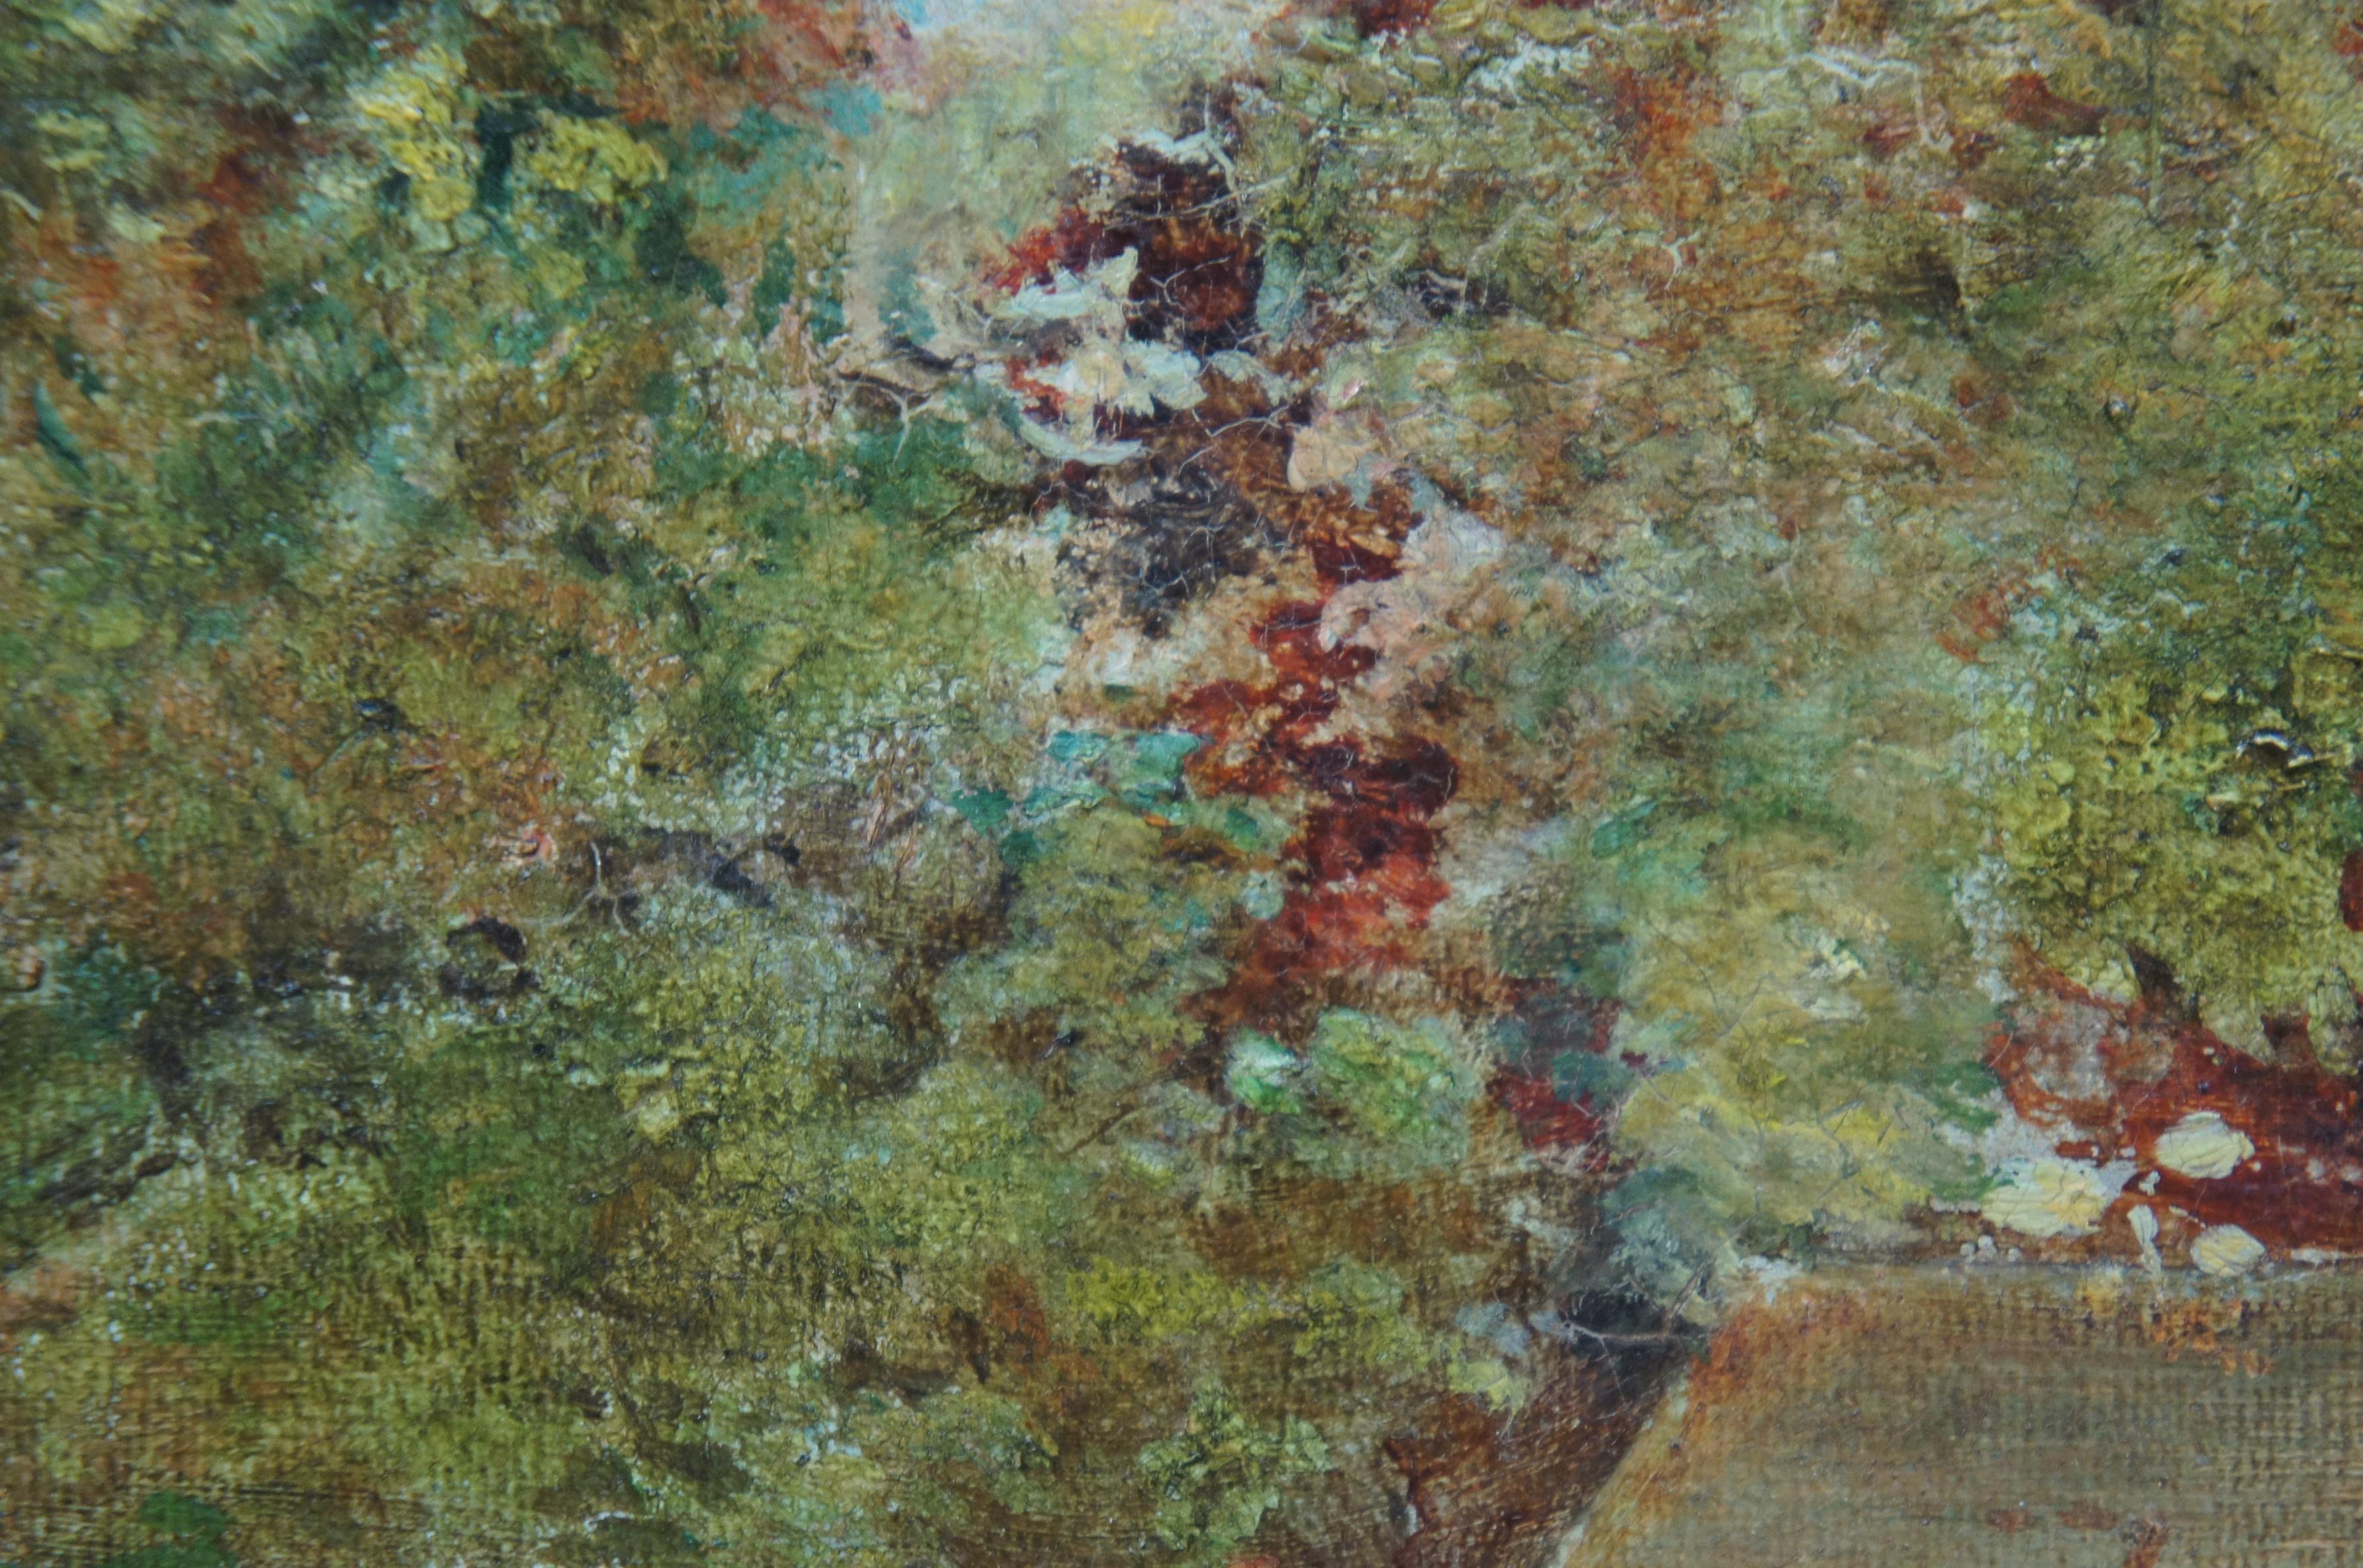 N.C. Wyeth Oil Painting University Landscape Gothic Architecture 4